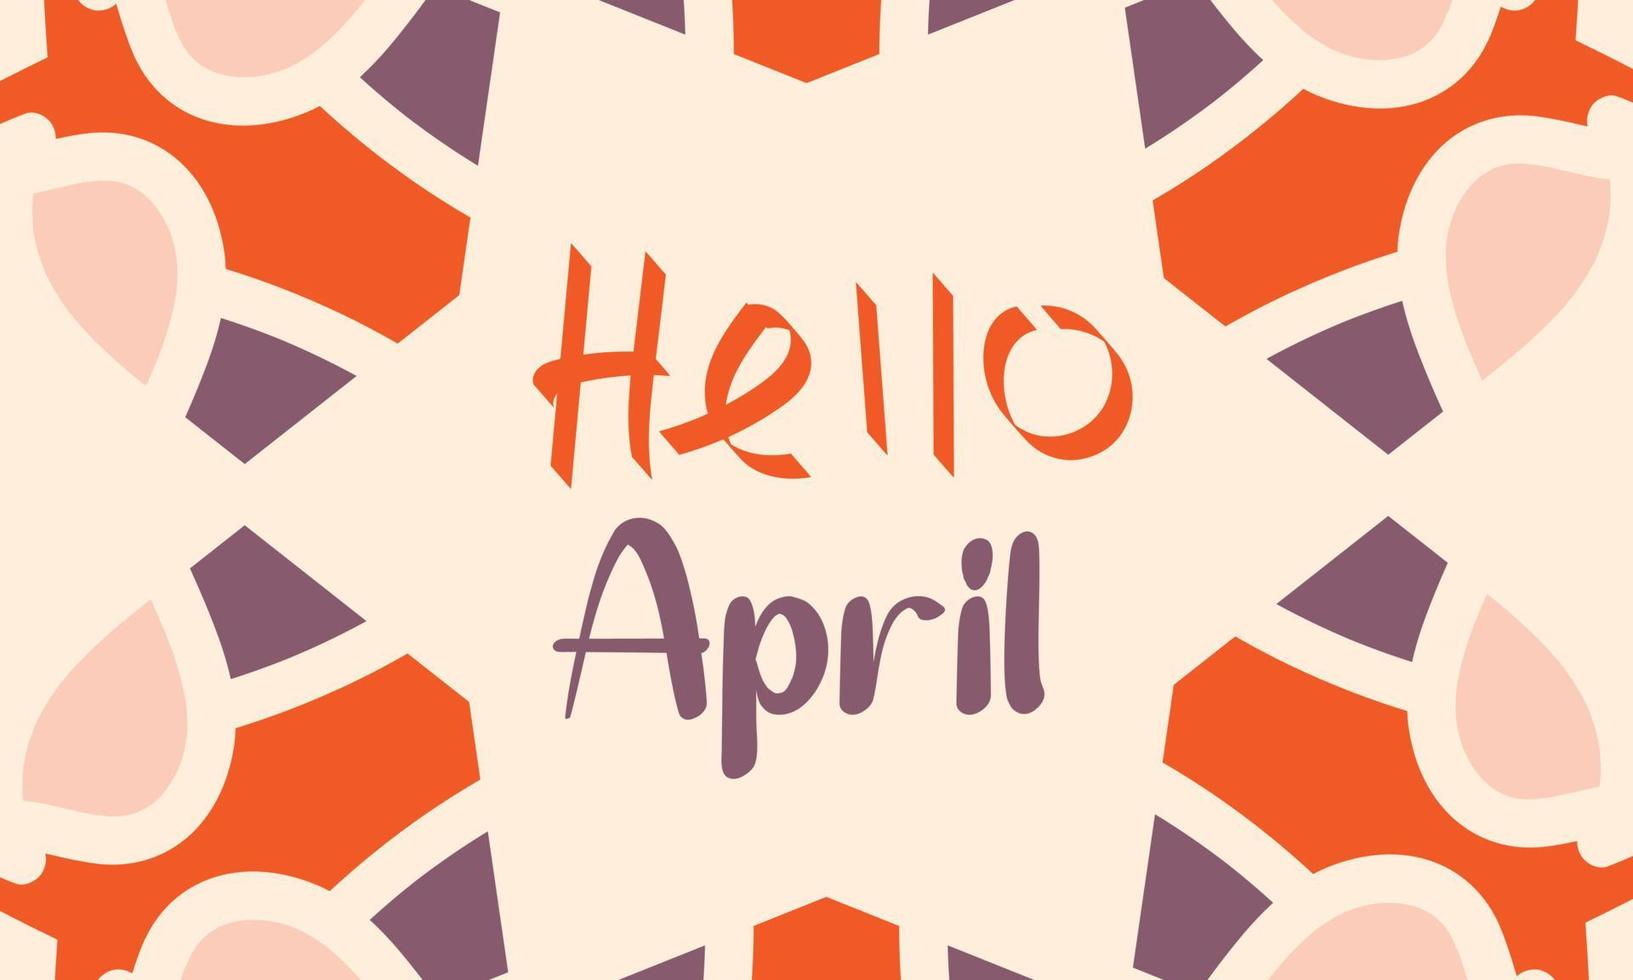 Hello April. April month vector with flowers  Decoration background. Design template celebration.